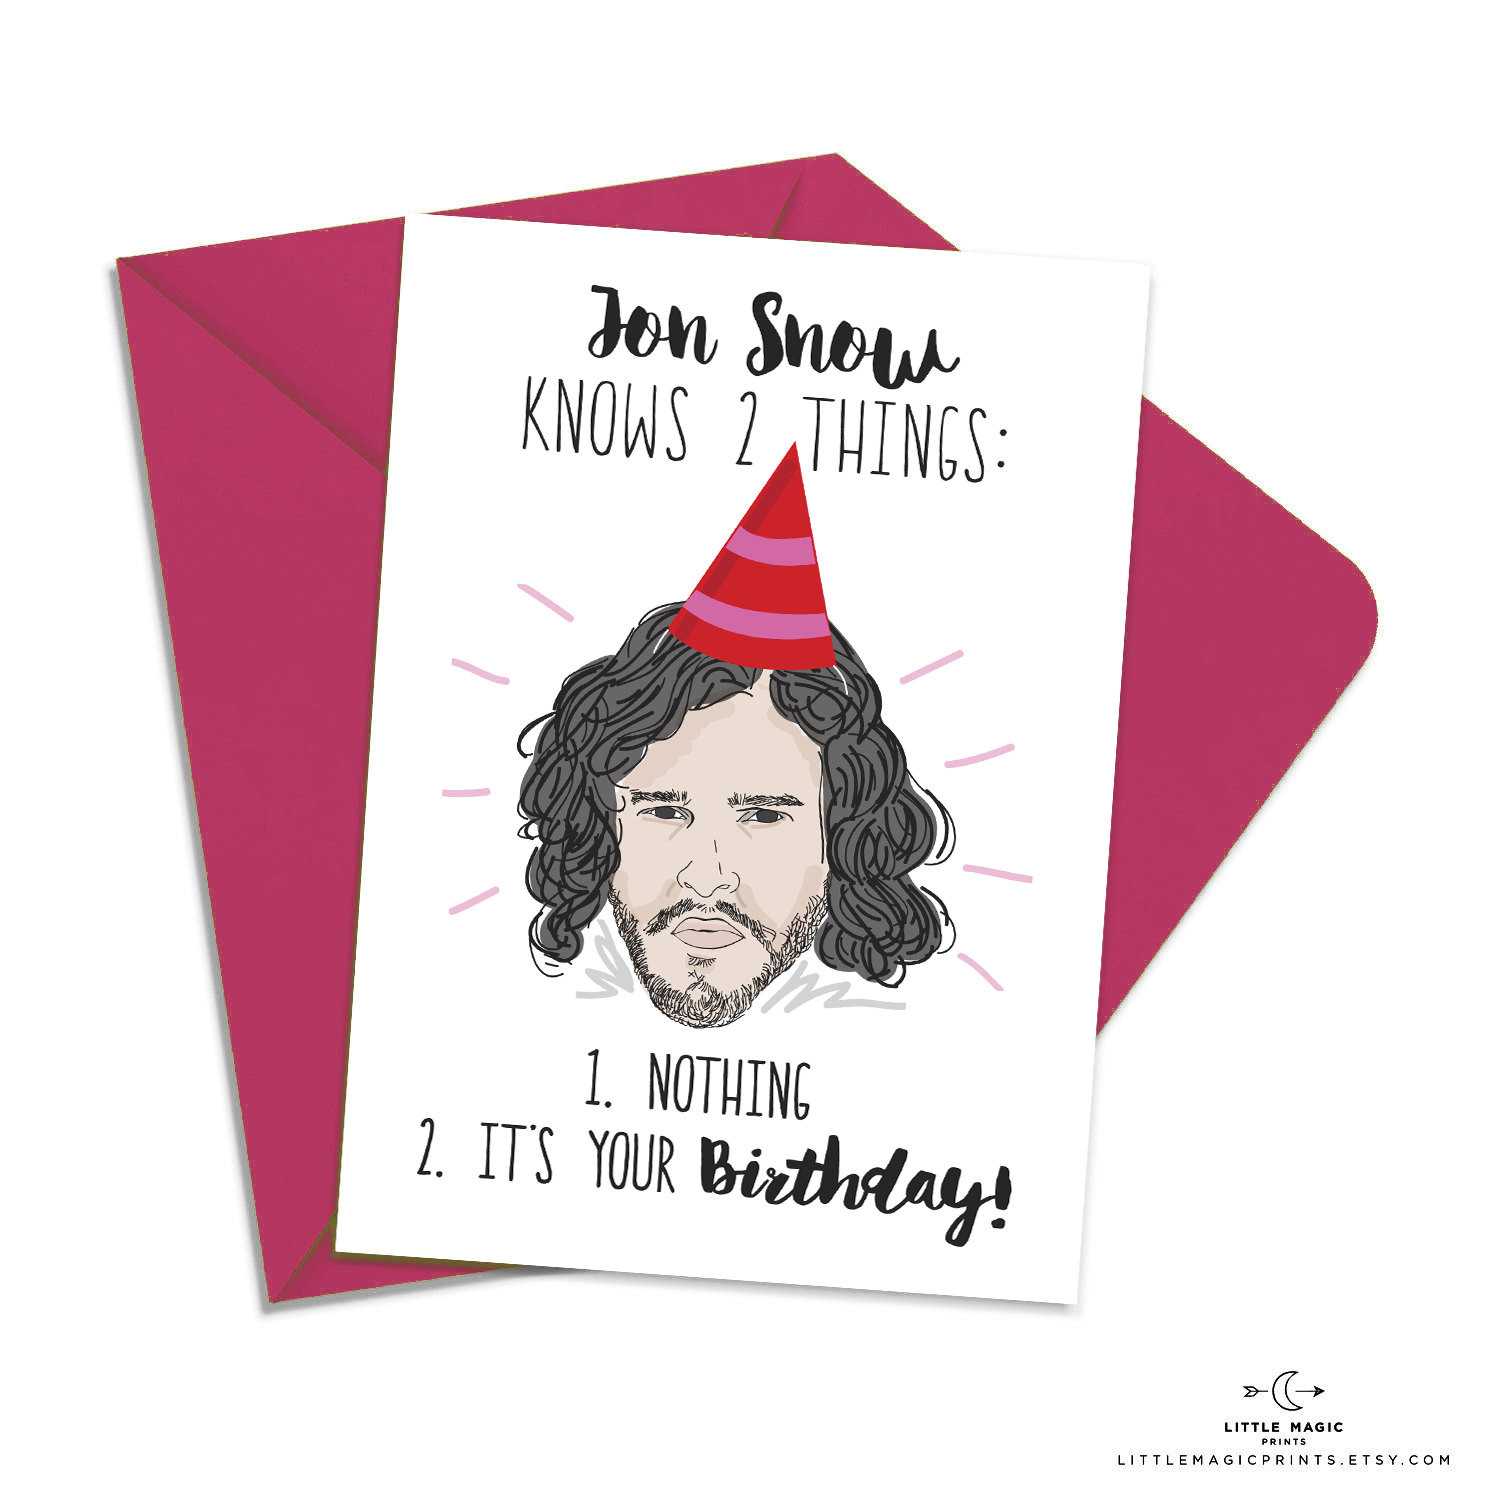 Best ideas about Game Of Thrones Birthday Card
. Save or Pin Printable Game of Thrones Card Printable Jon Snow Birthday Now.